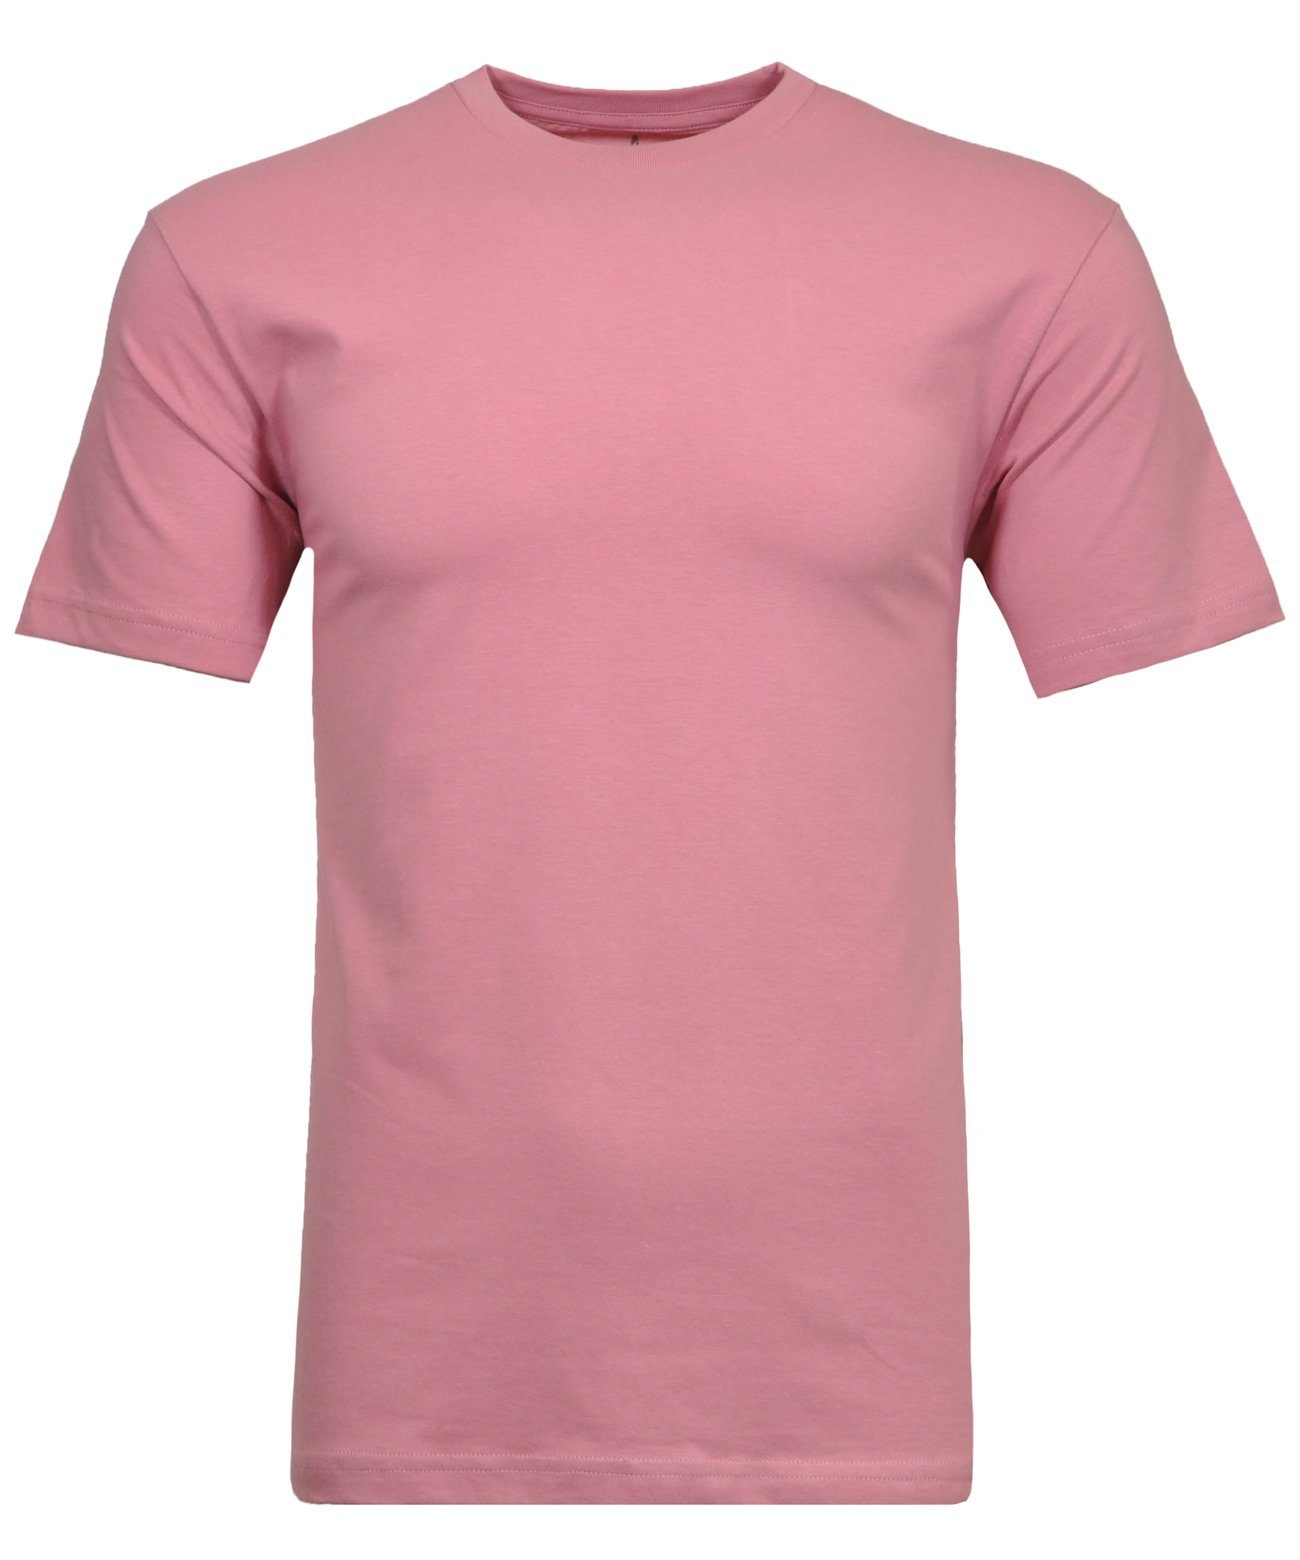 RAGMAN T-Shirt Pink-641